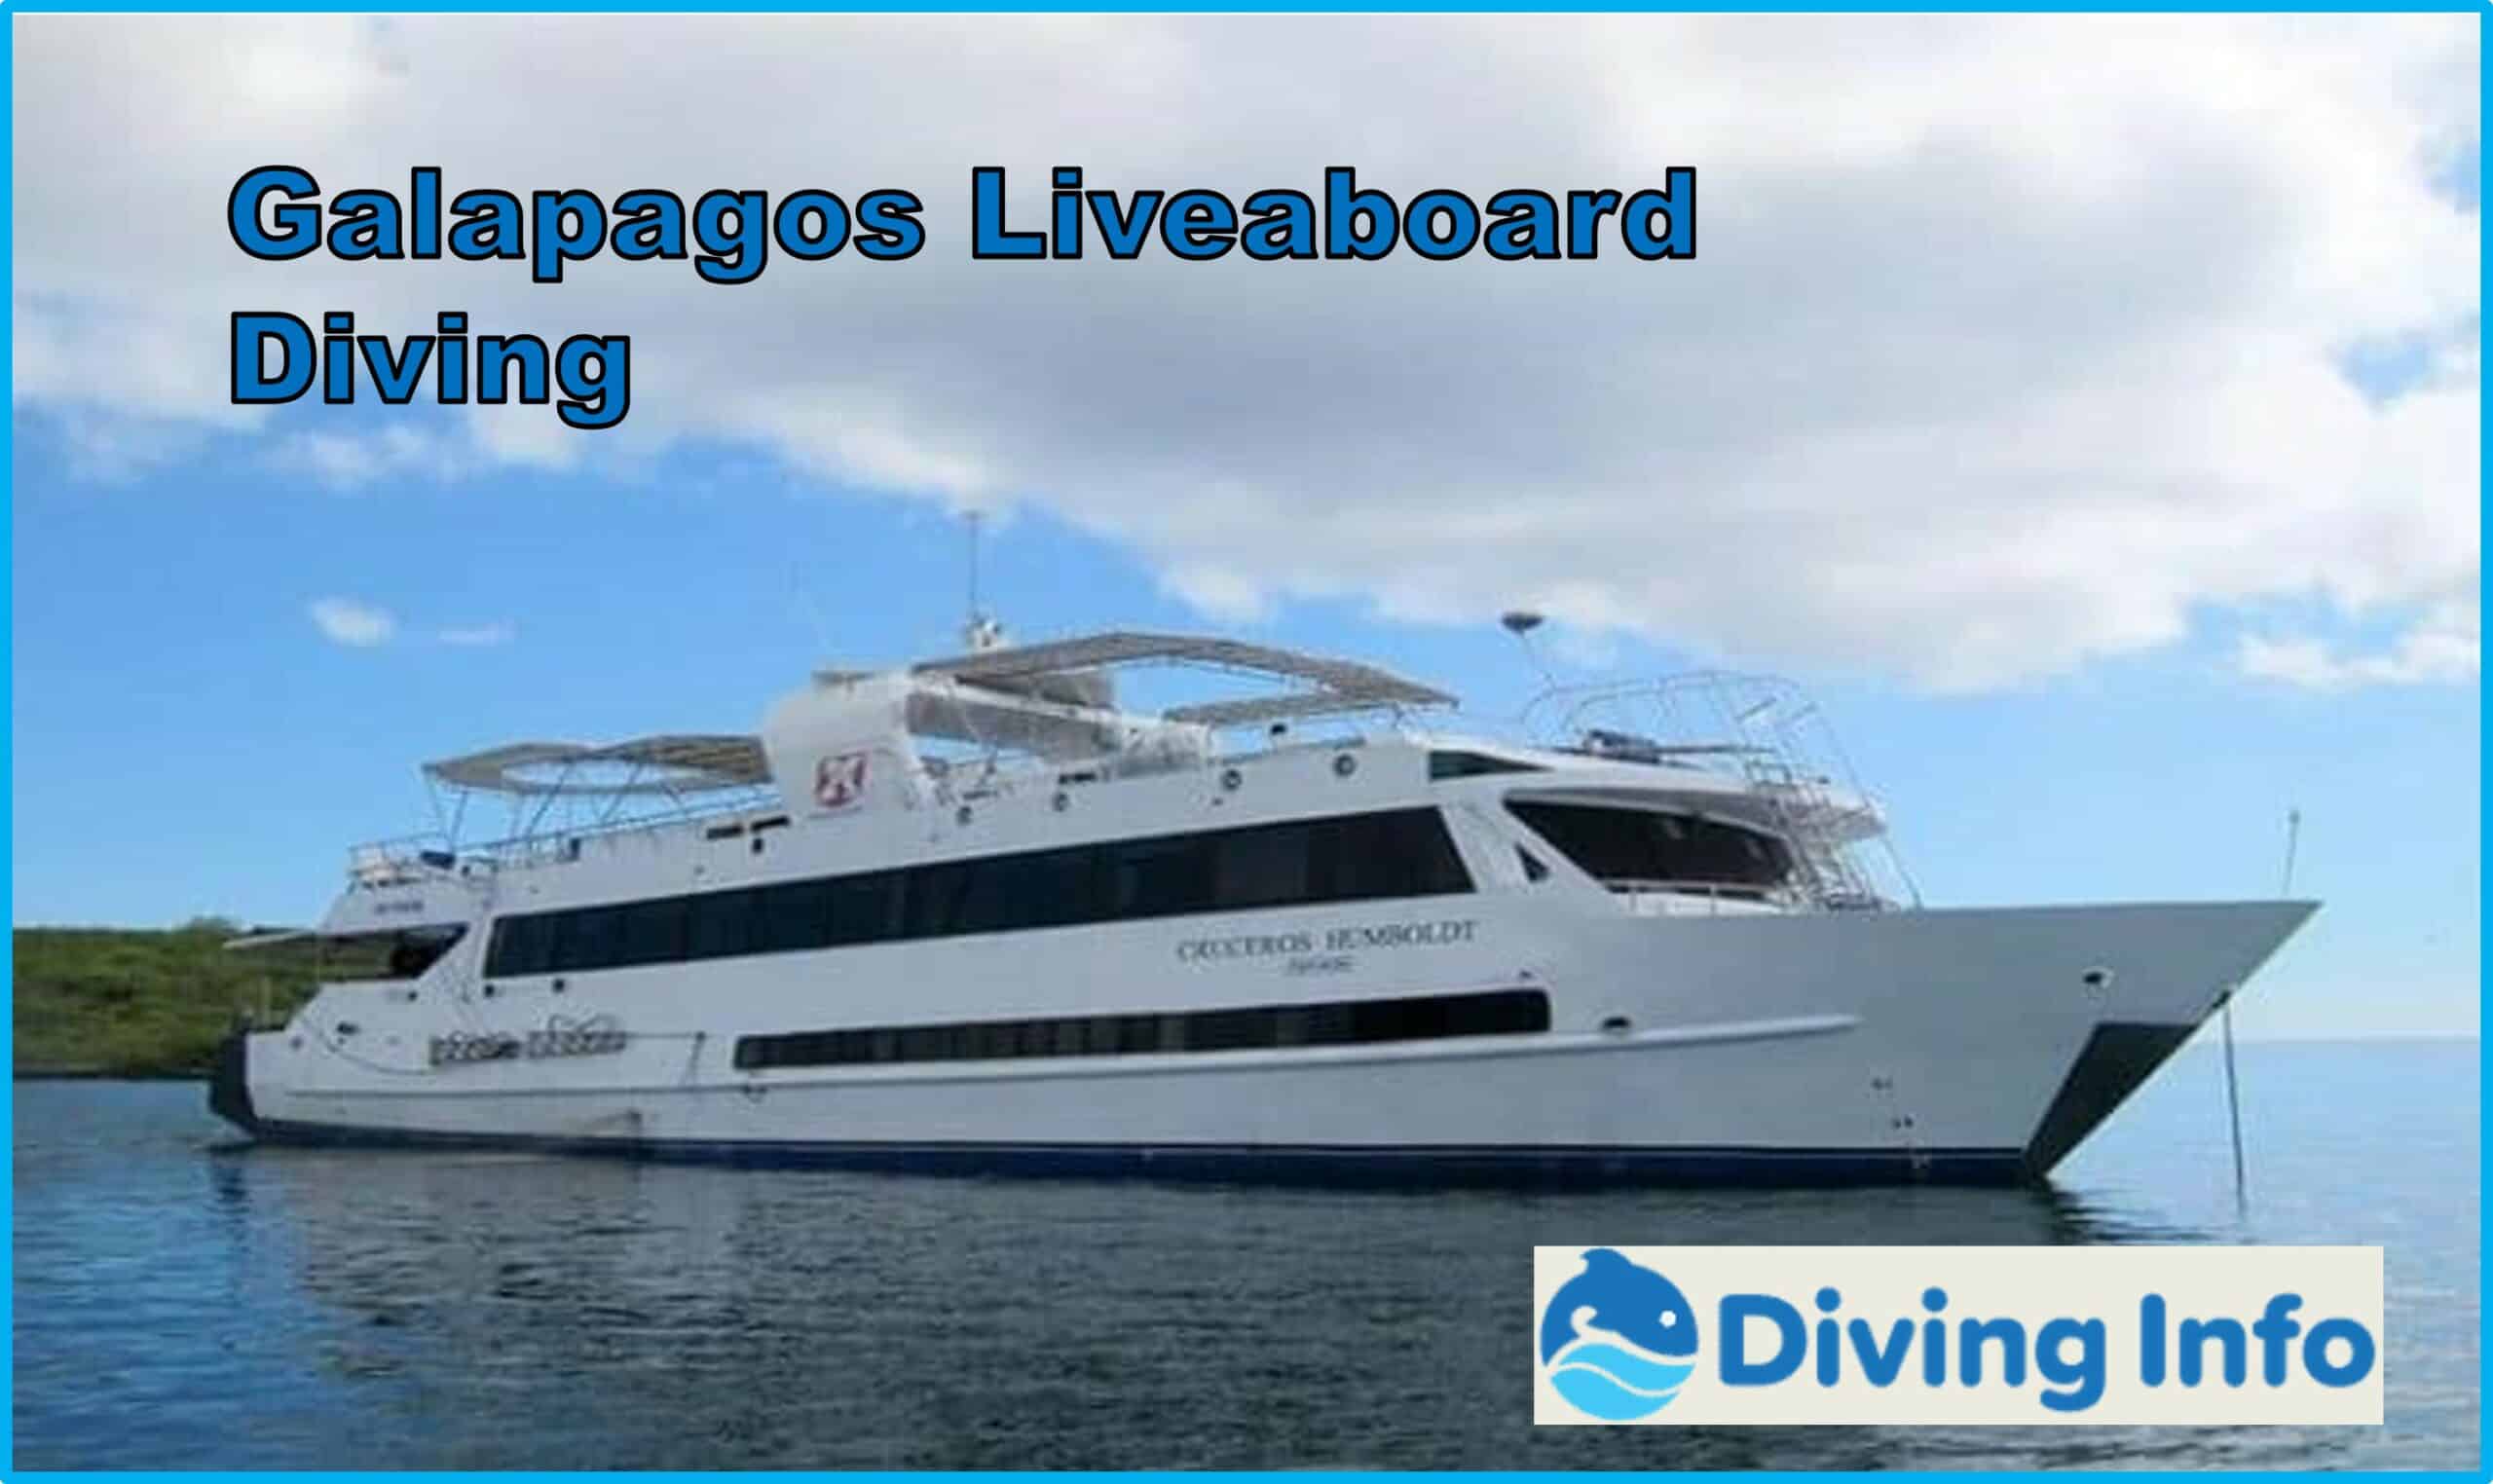 Galapagos Liveaboard Diving